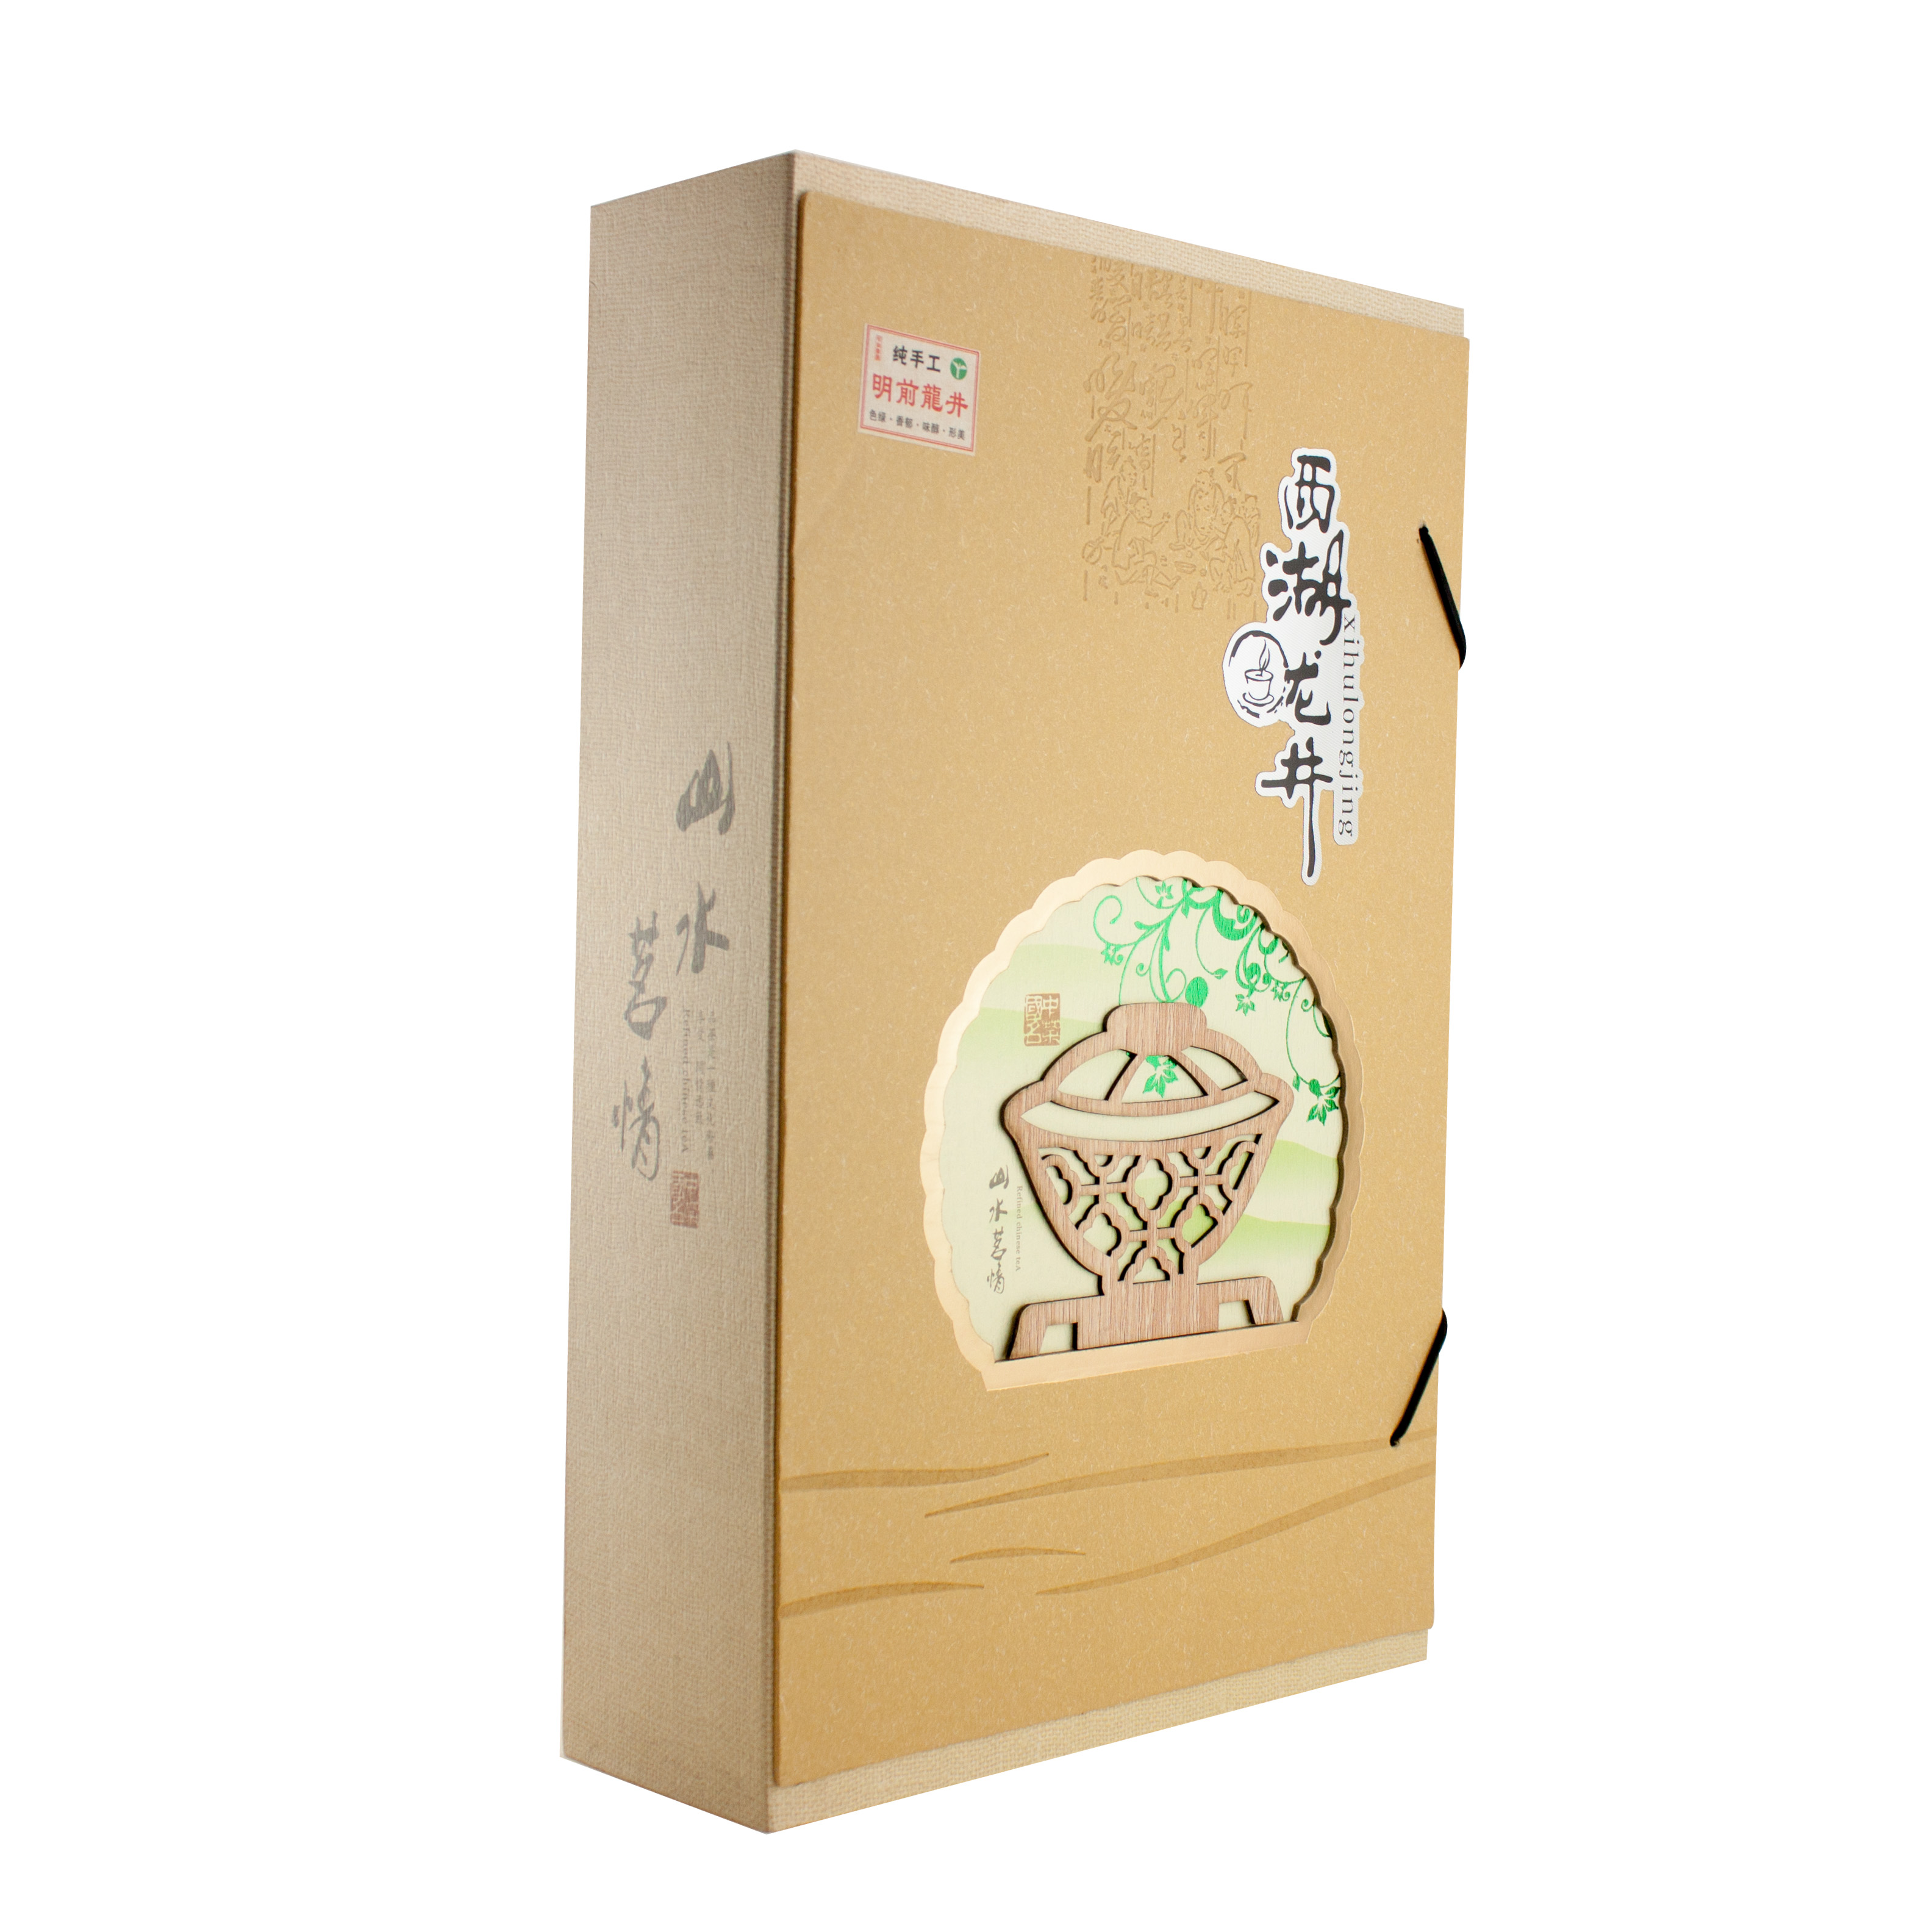 High Quality Book Shaped Tea Cardboard Box Packaging For Tea